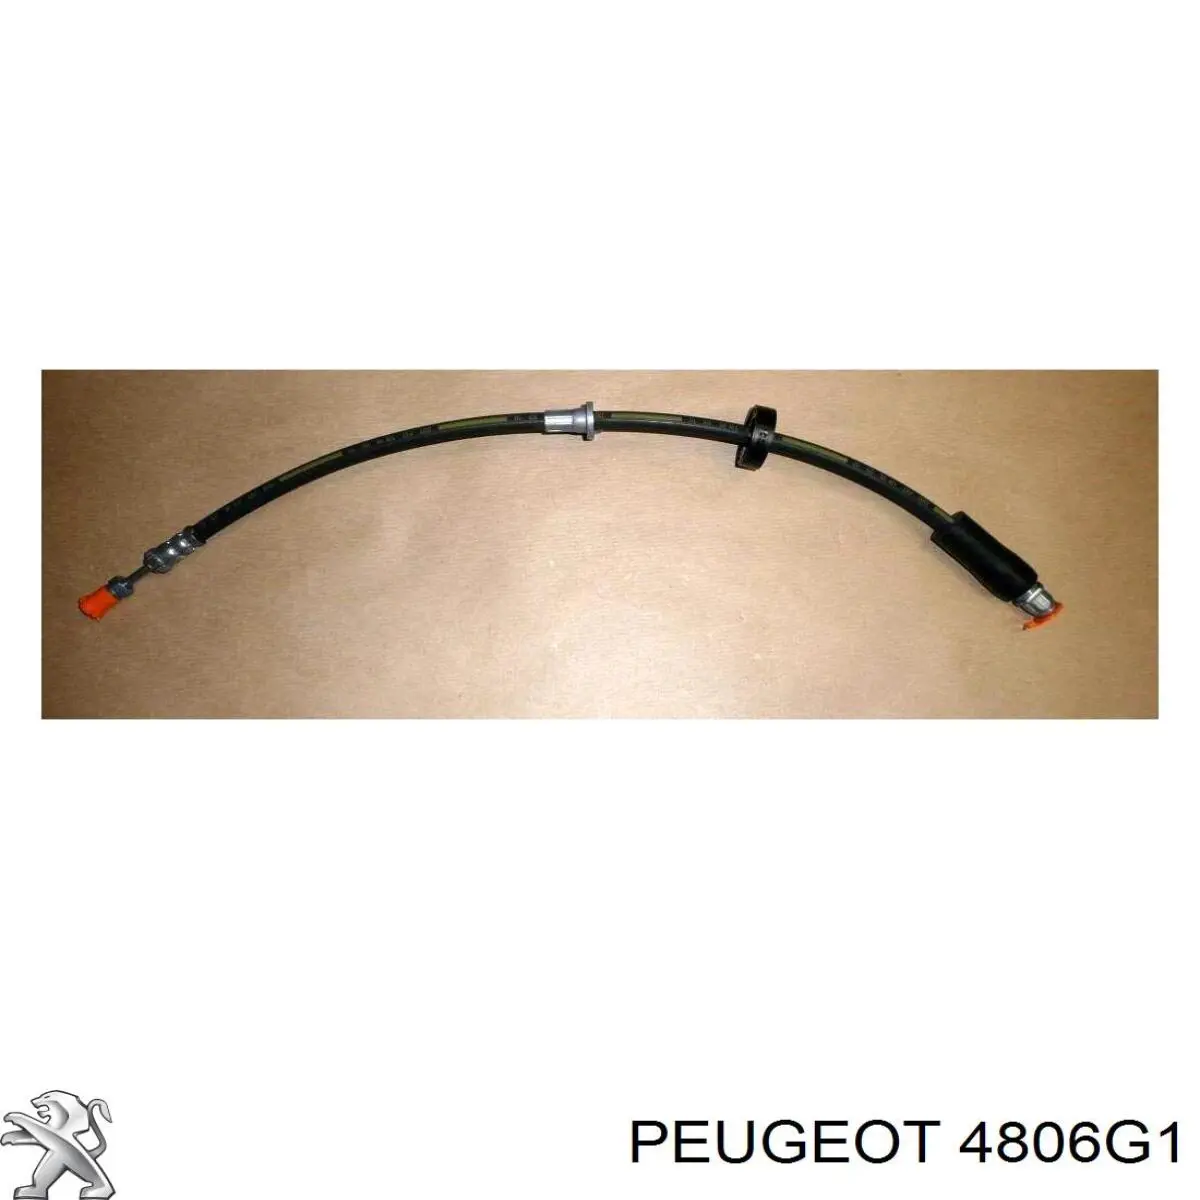 4806G1 Peugeot/Citroen latiguillo de freno delantero